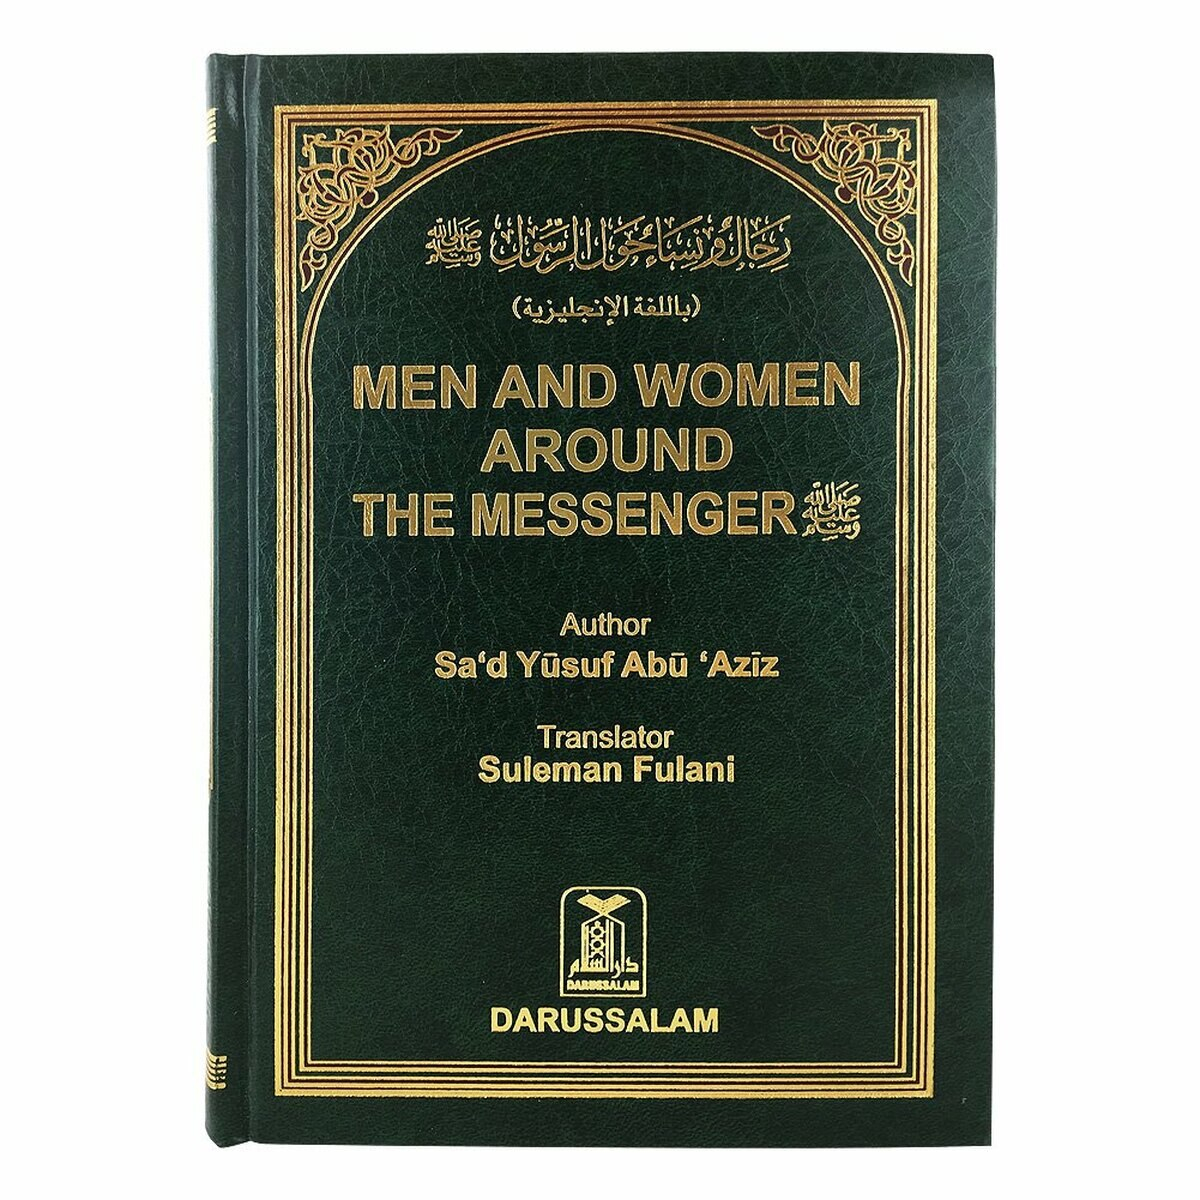 Men & Women Around the Messenger